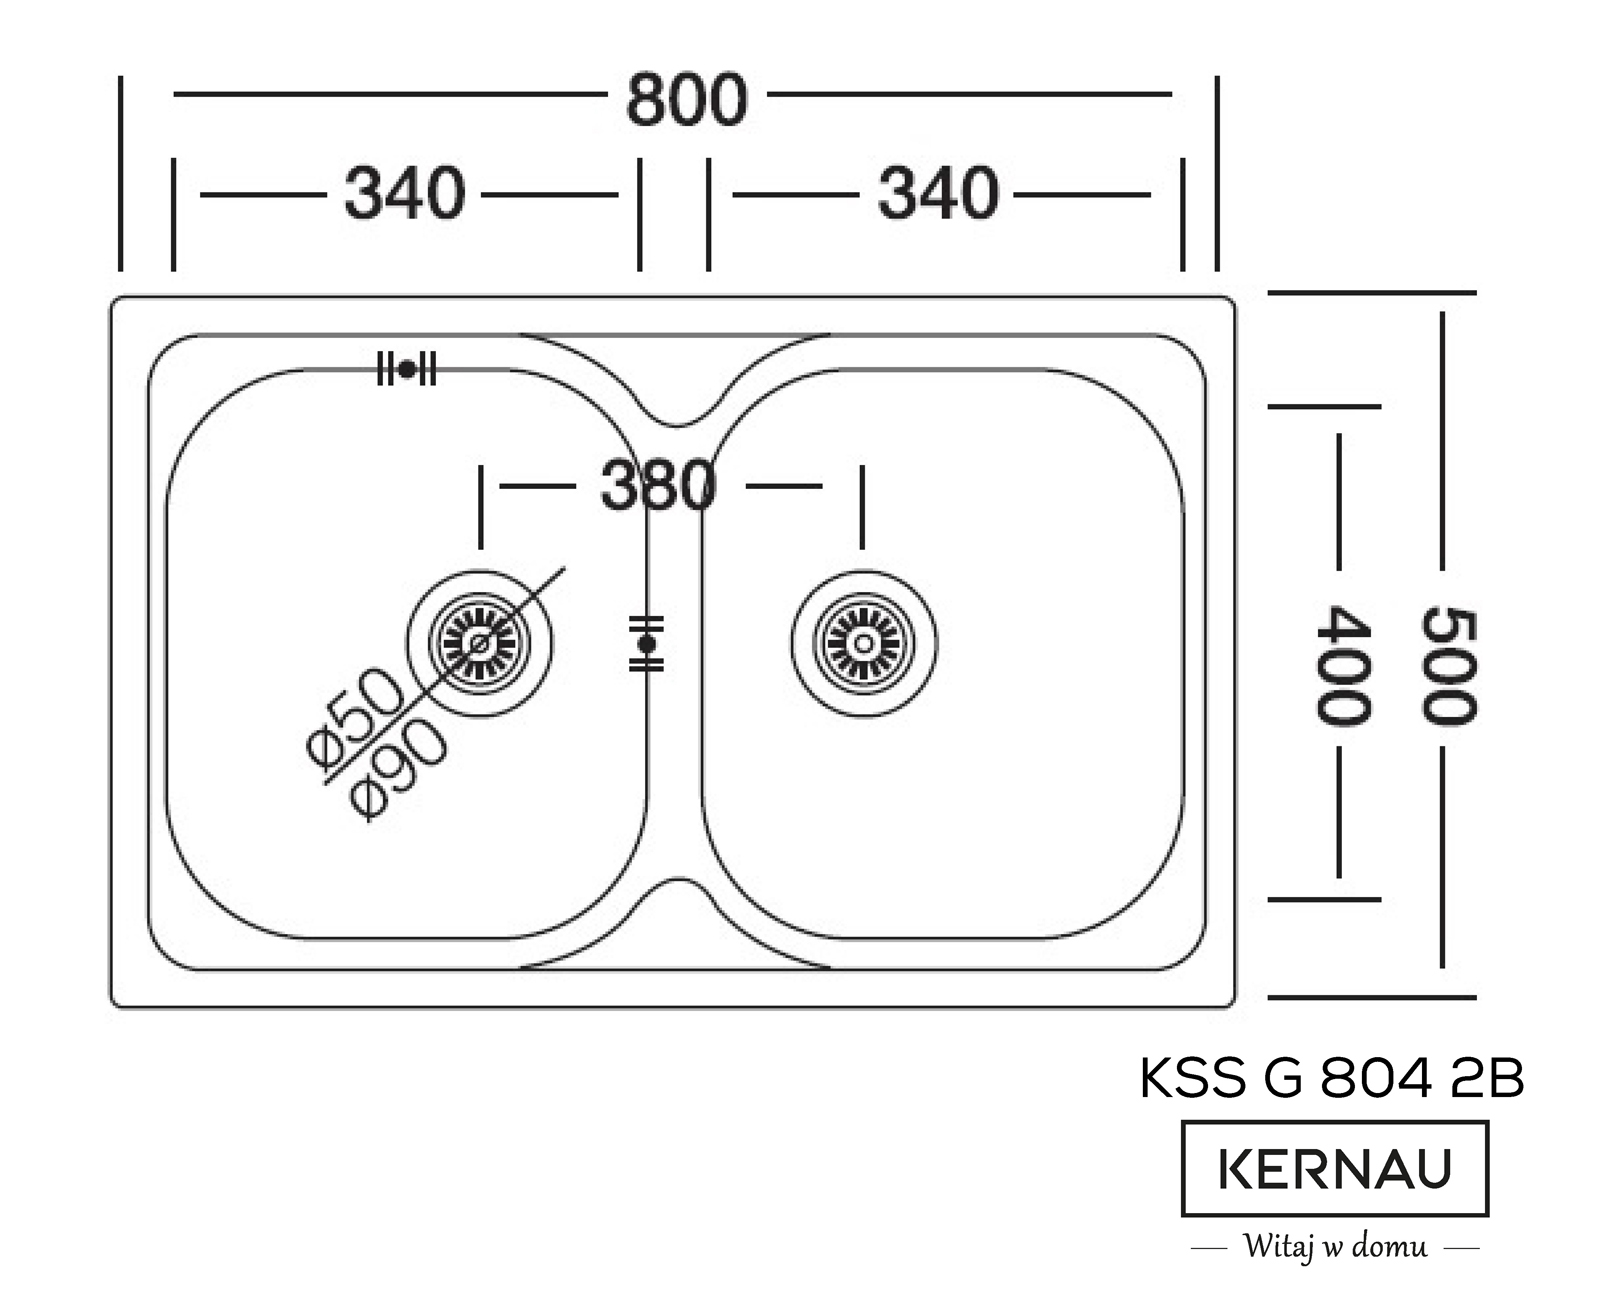 KSS G 804 2B LINEN